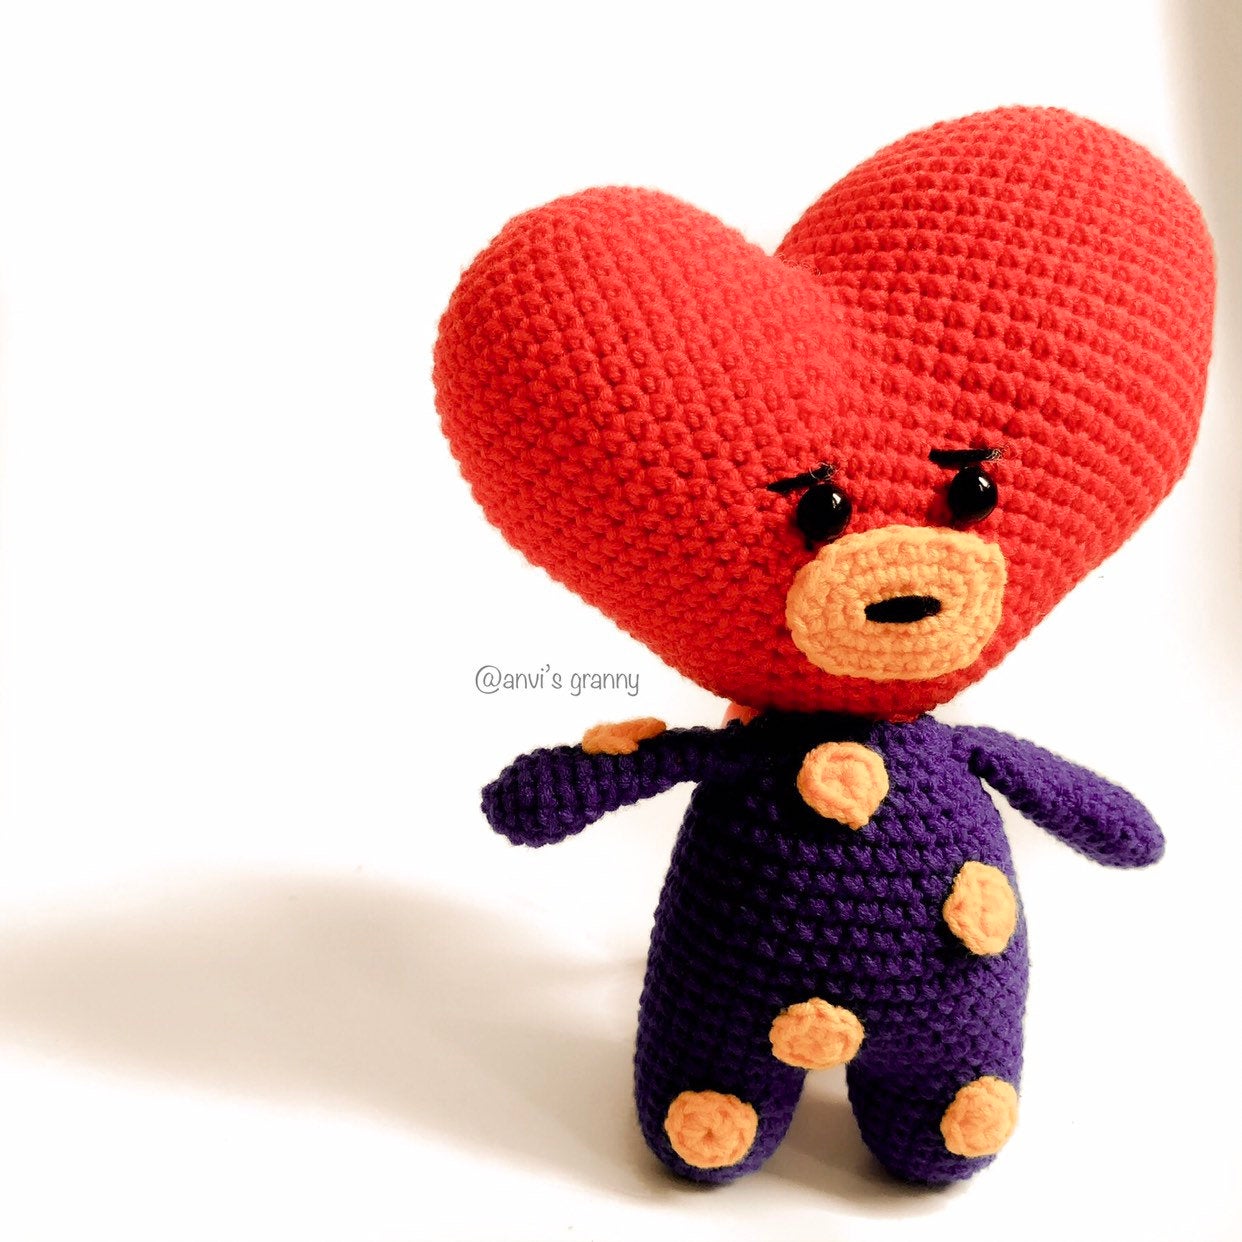 Heart for mom - Tata PDF crochet pattern, BT21 BTS Korean Band Doll, amigurumi doll pattern (English)